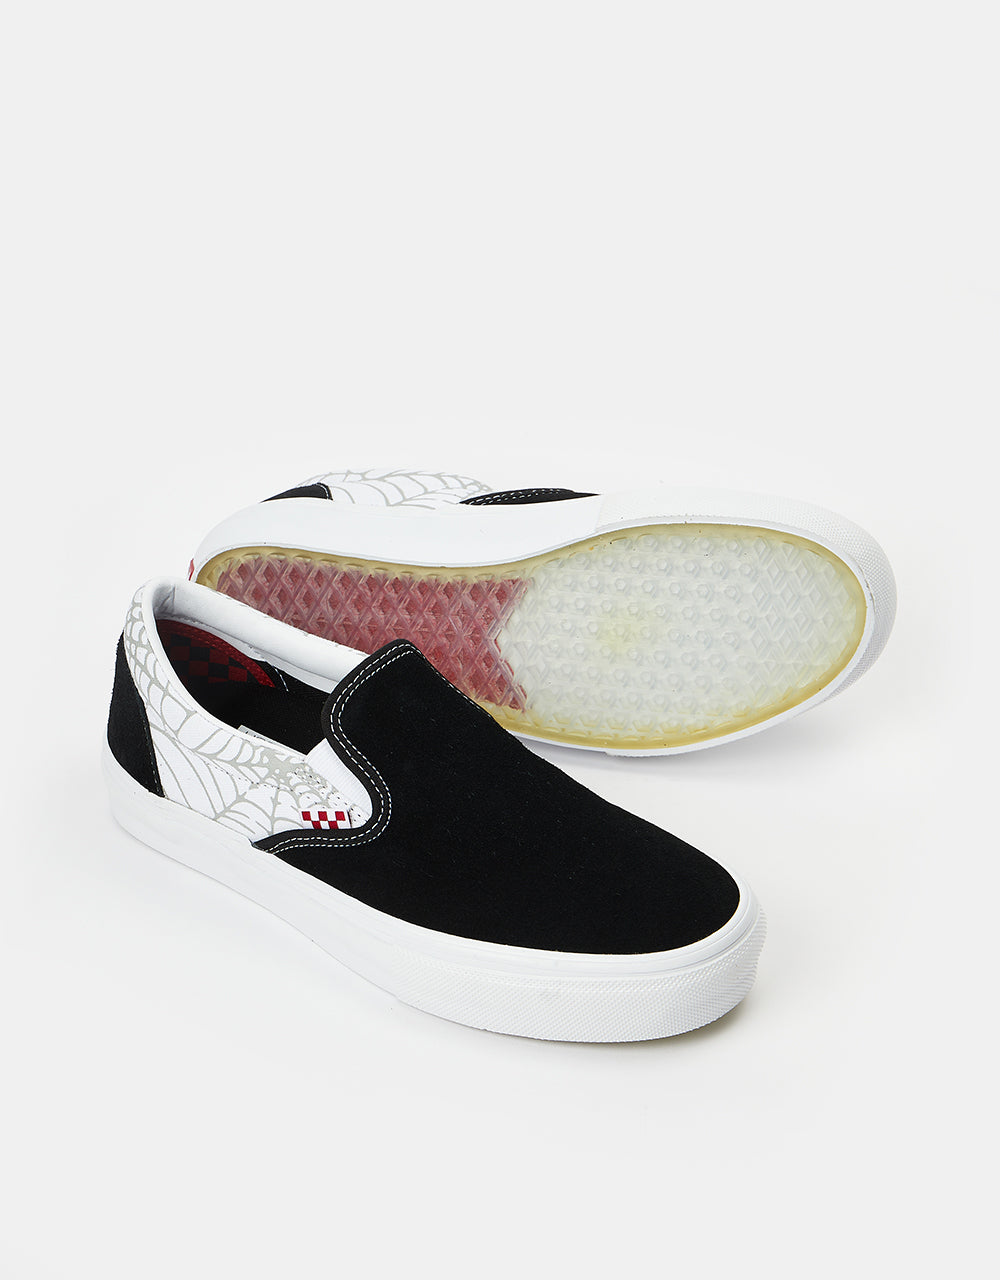 Vans Skate Slip On Shoes - (Black Widow) Black/White/Red